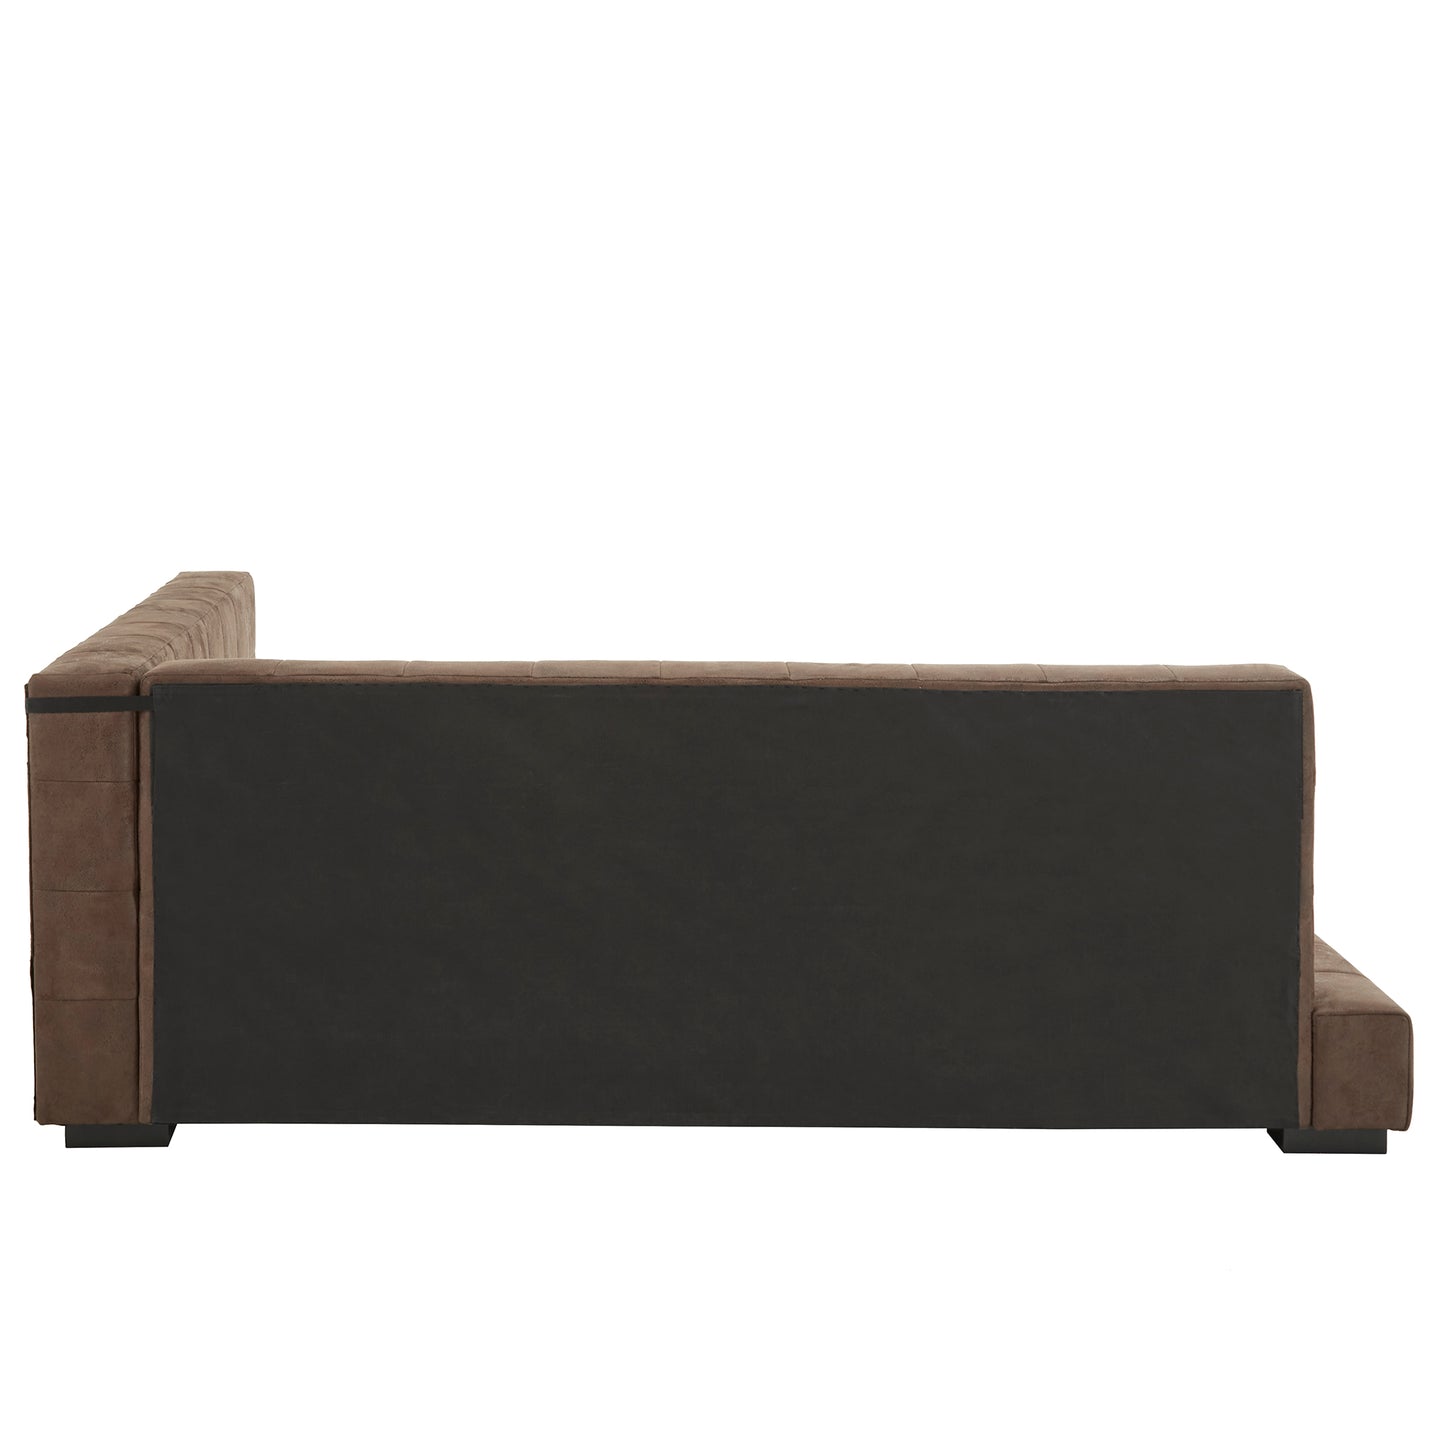 Fabric Upholstered Lounger - Full Size